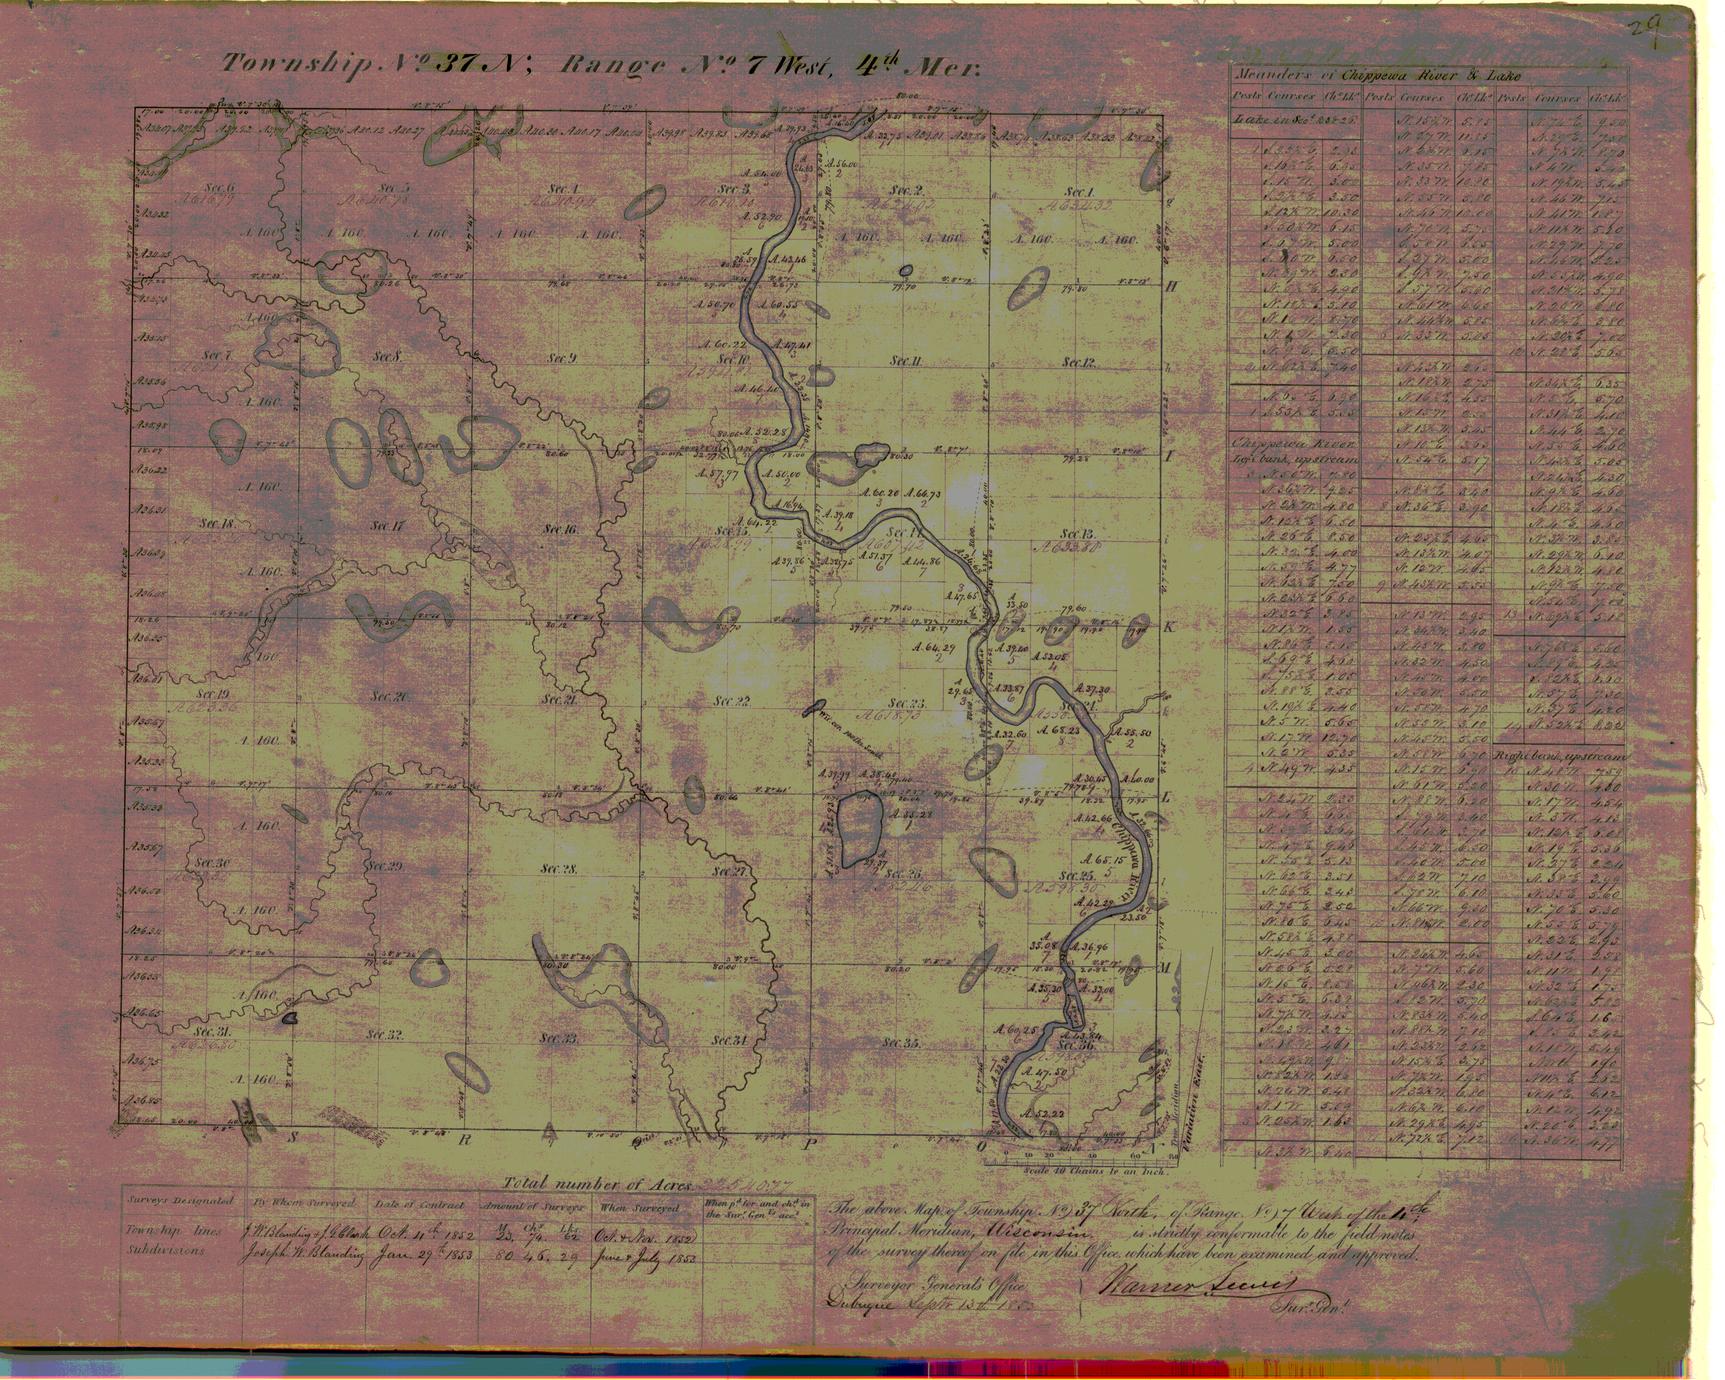 [Public Land Survey System map: Wisconsin Township 37 North, Range 07 West]